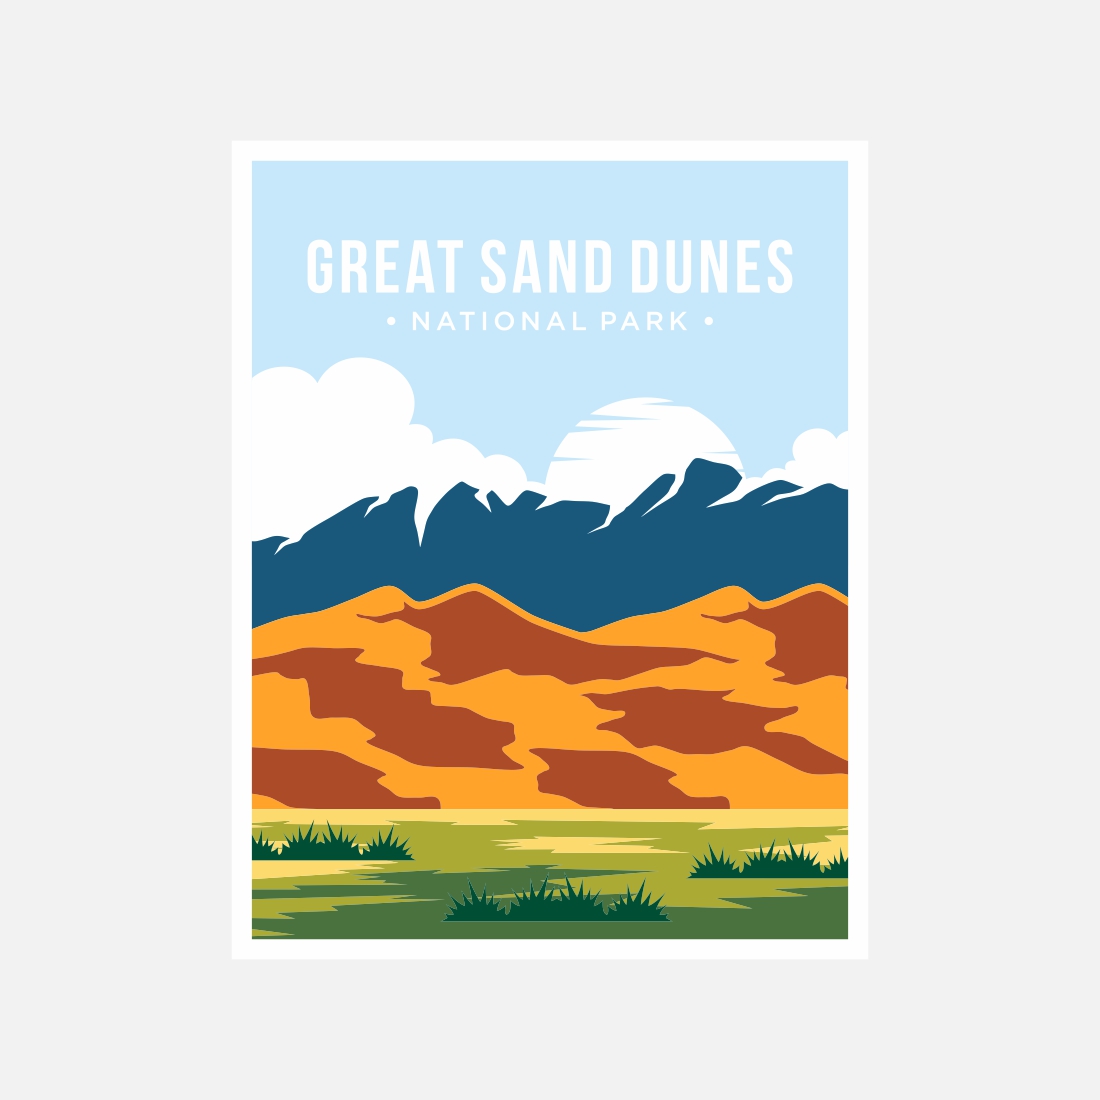 Great Sand Dune national park poster vector illustration design – Only $8 cover image.